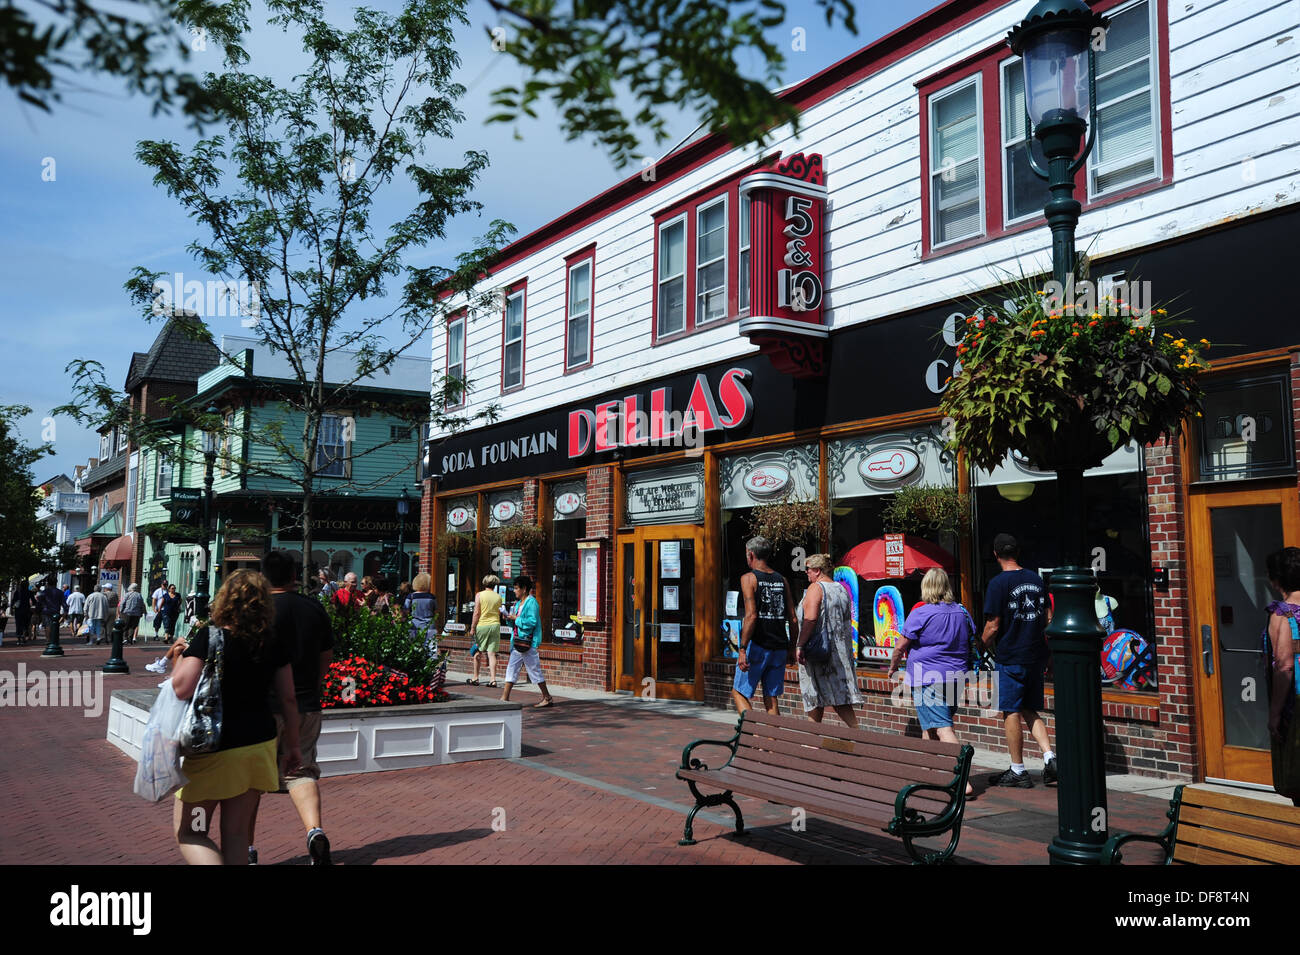 USA New Jersey NJ N.J. Cape May Washington Street turned pedestrian mall of shops and restaurants Stock Photo